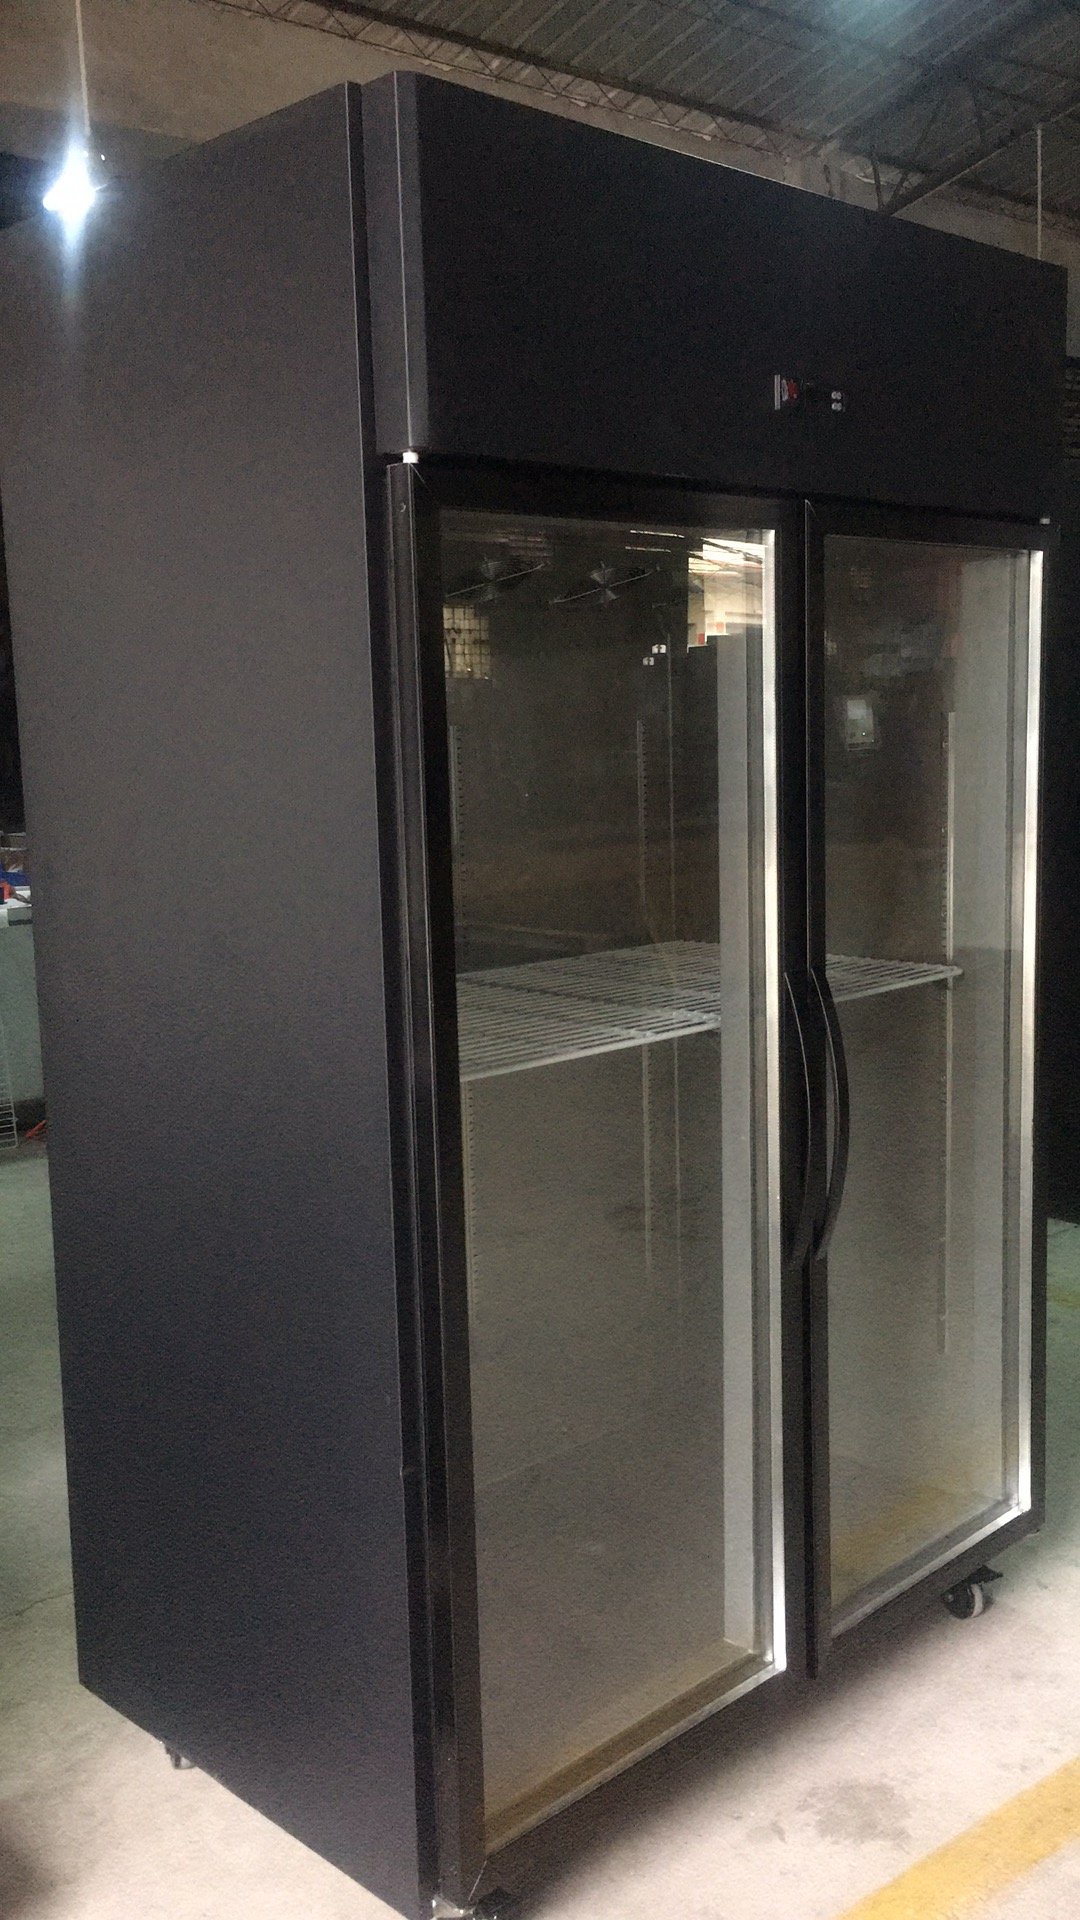 4 doors true commercial refrigerator